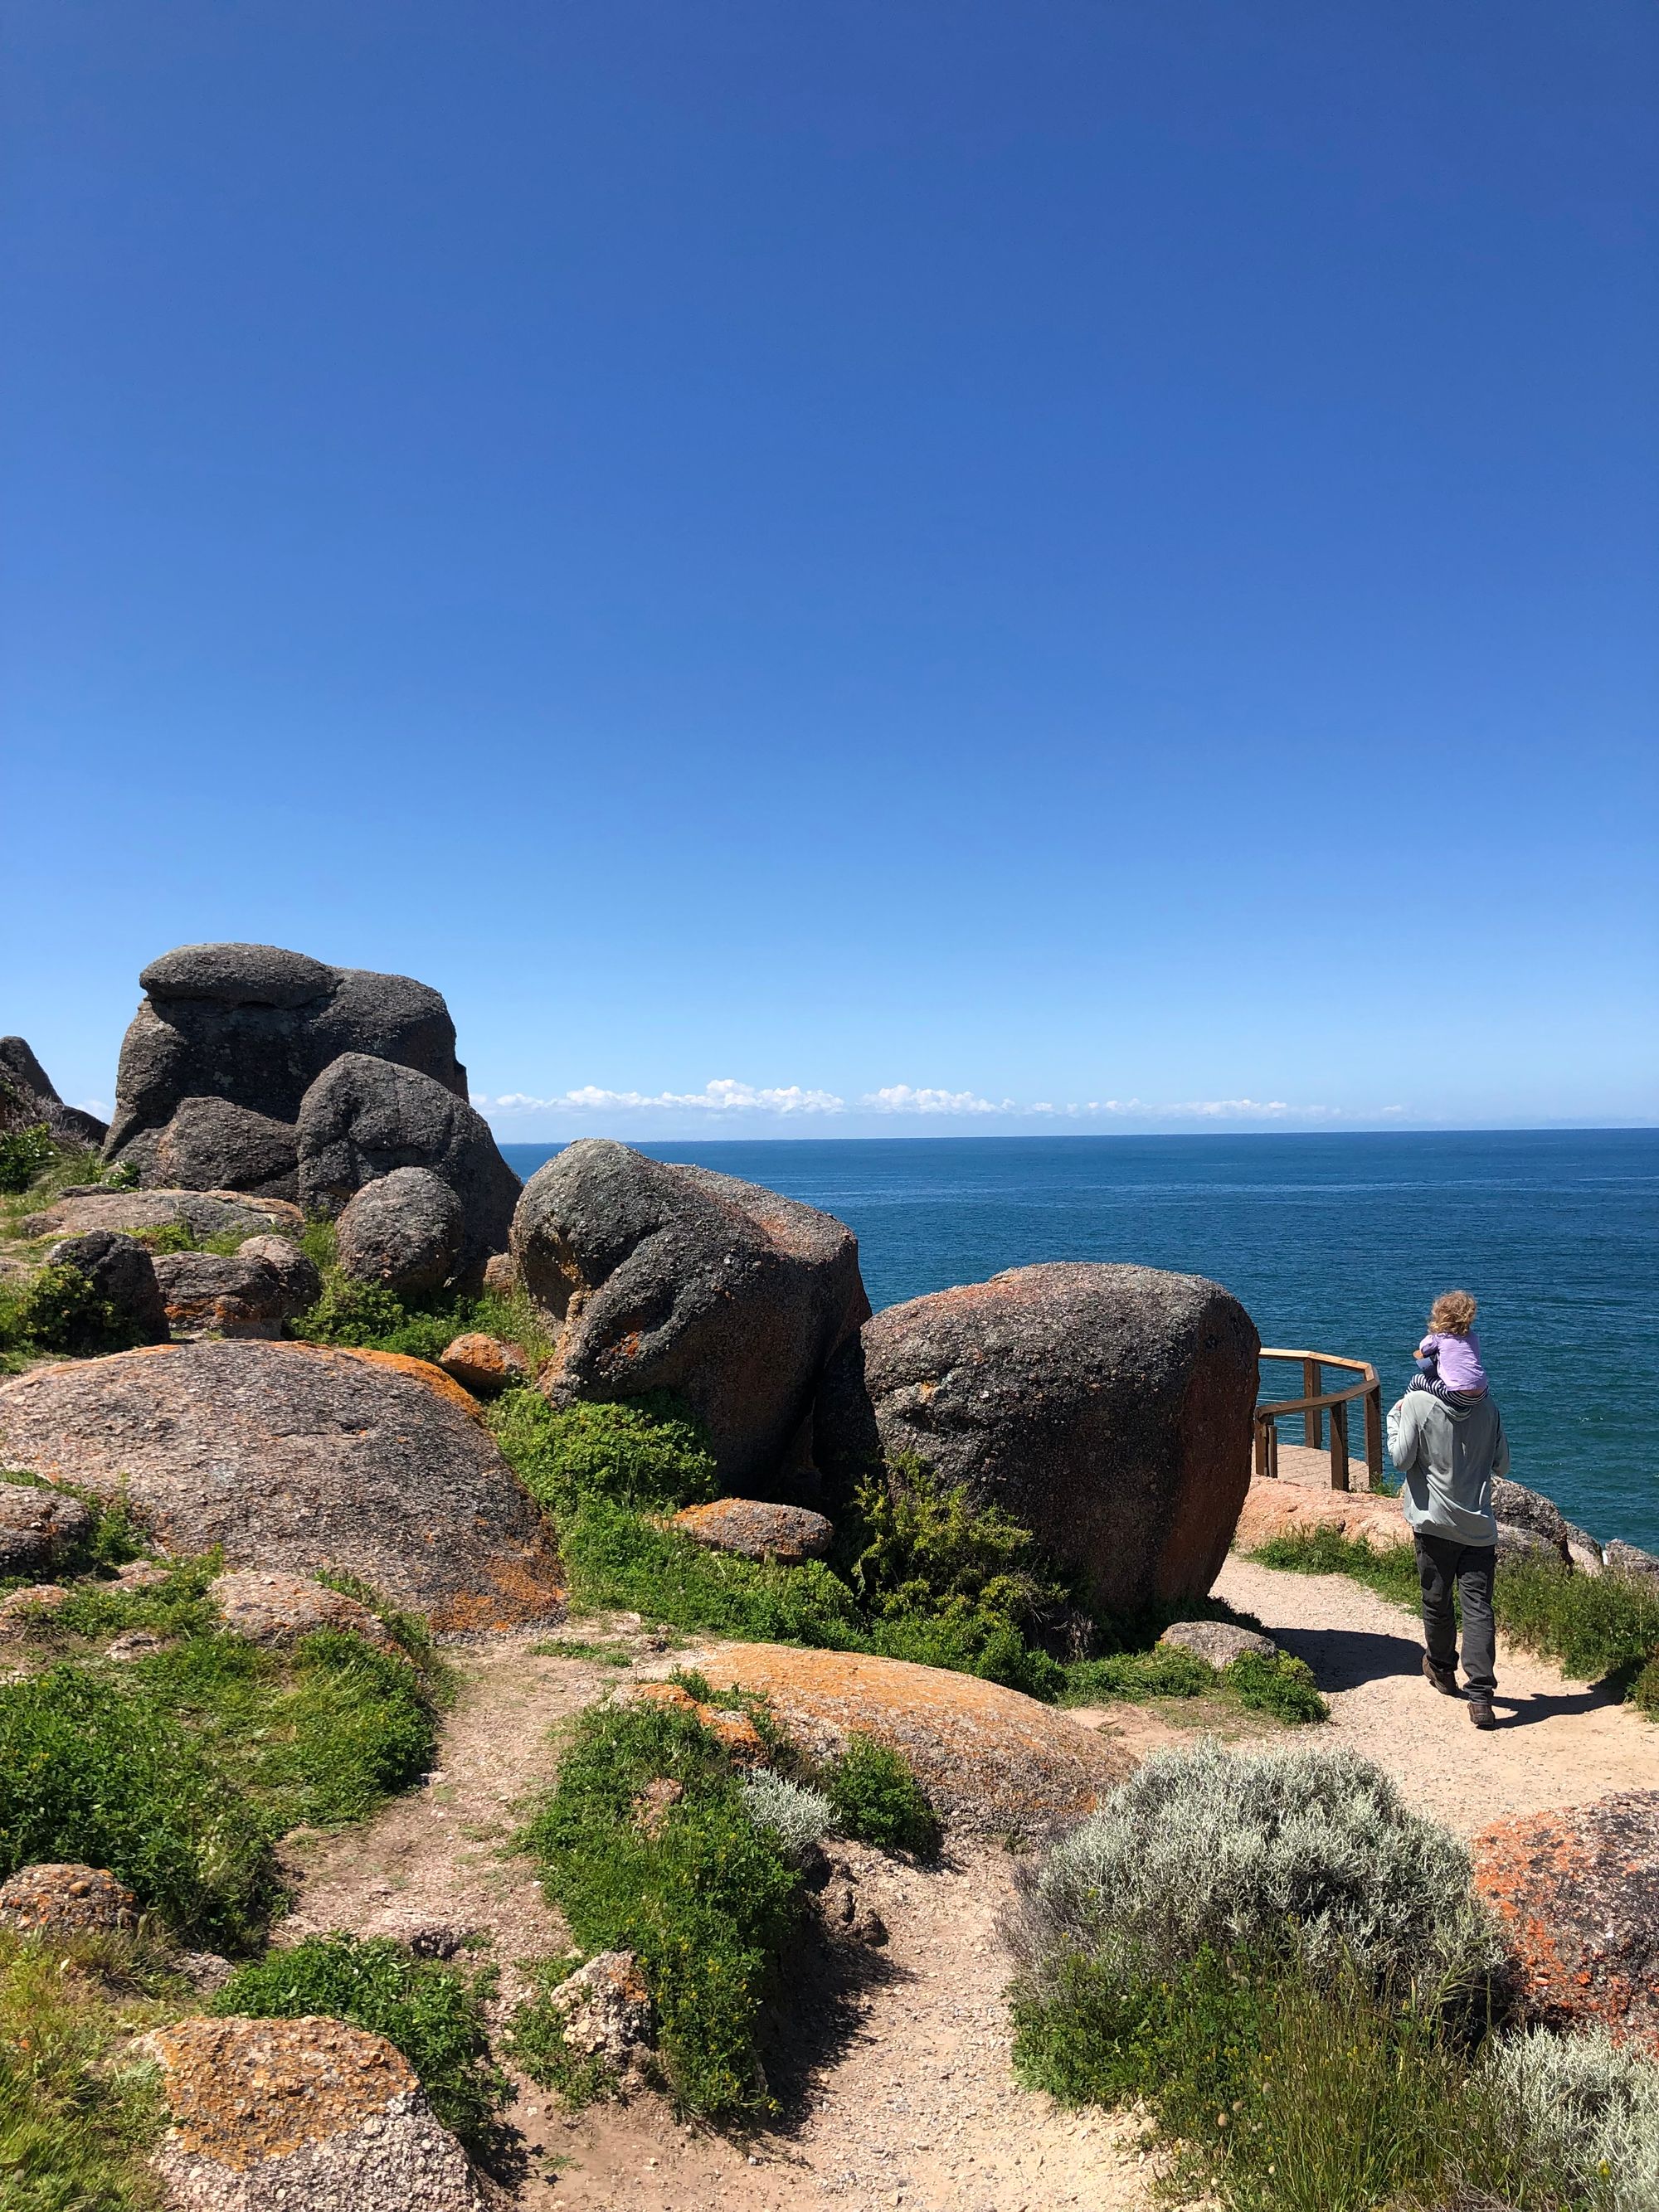 Granite island, victor harbor South Australia